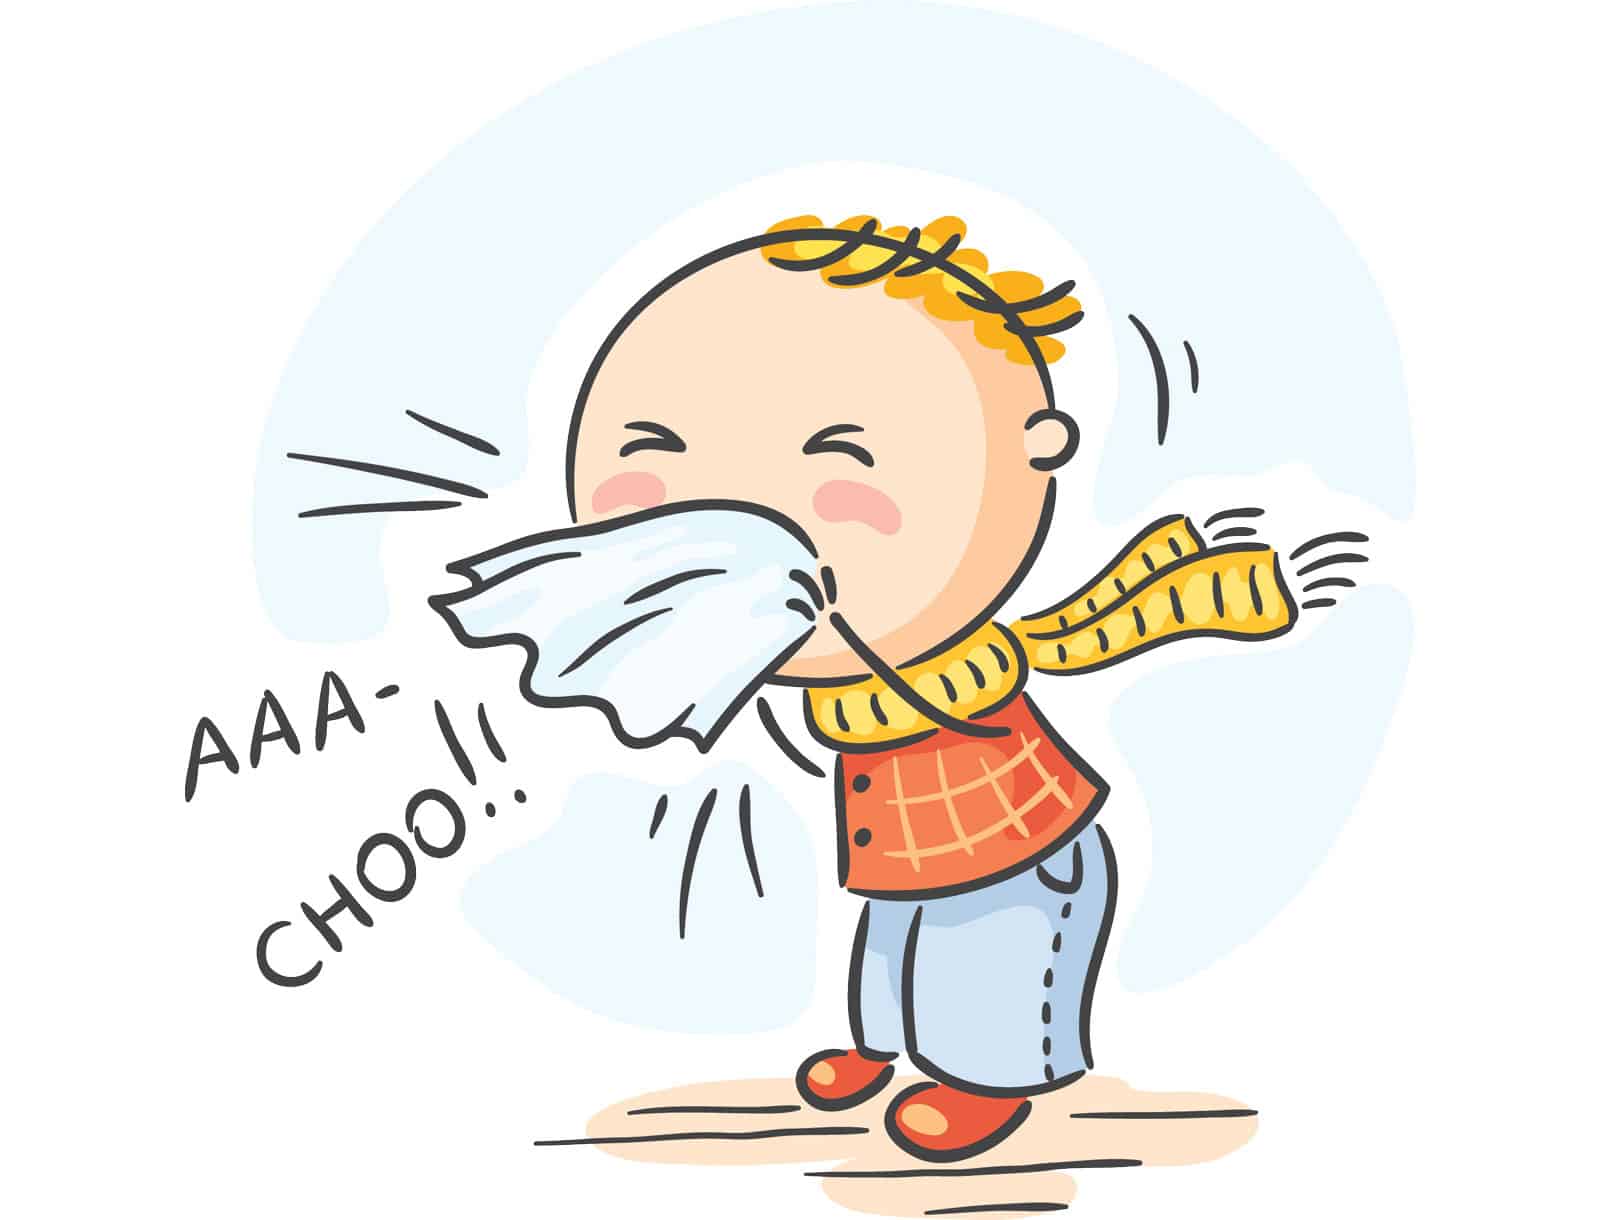 Sneezing cartoon